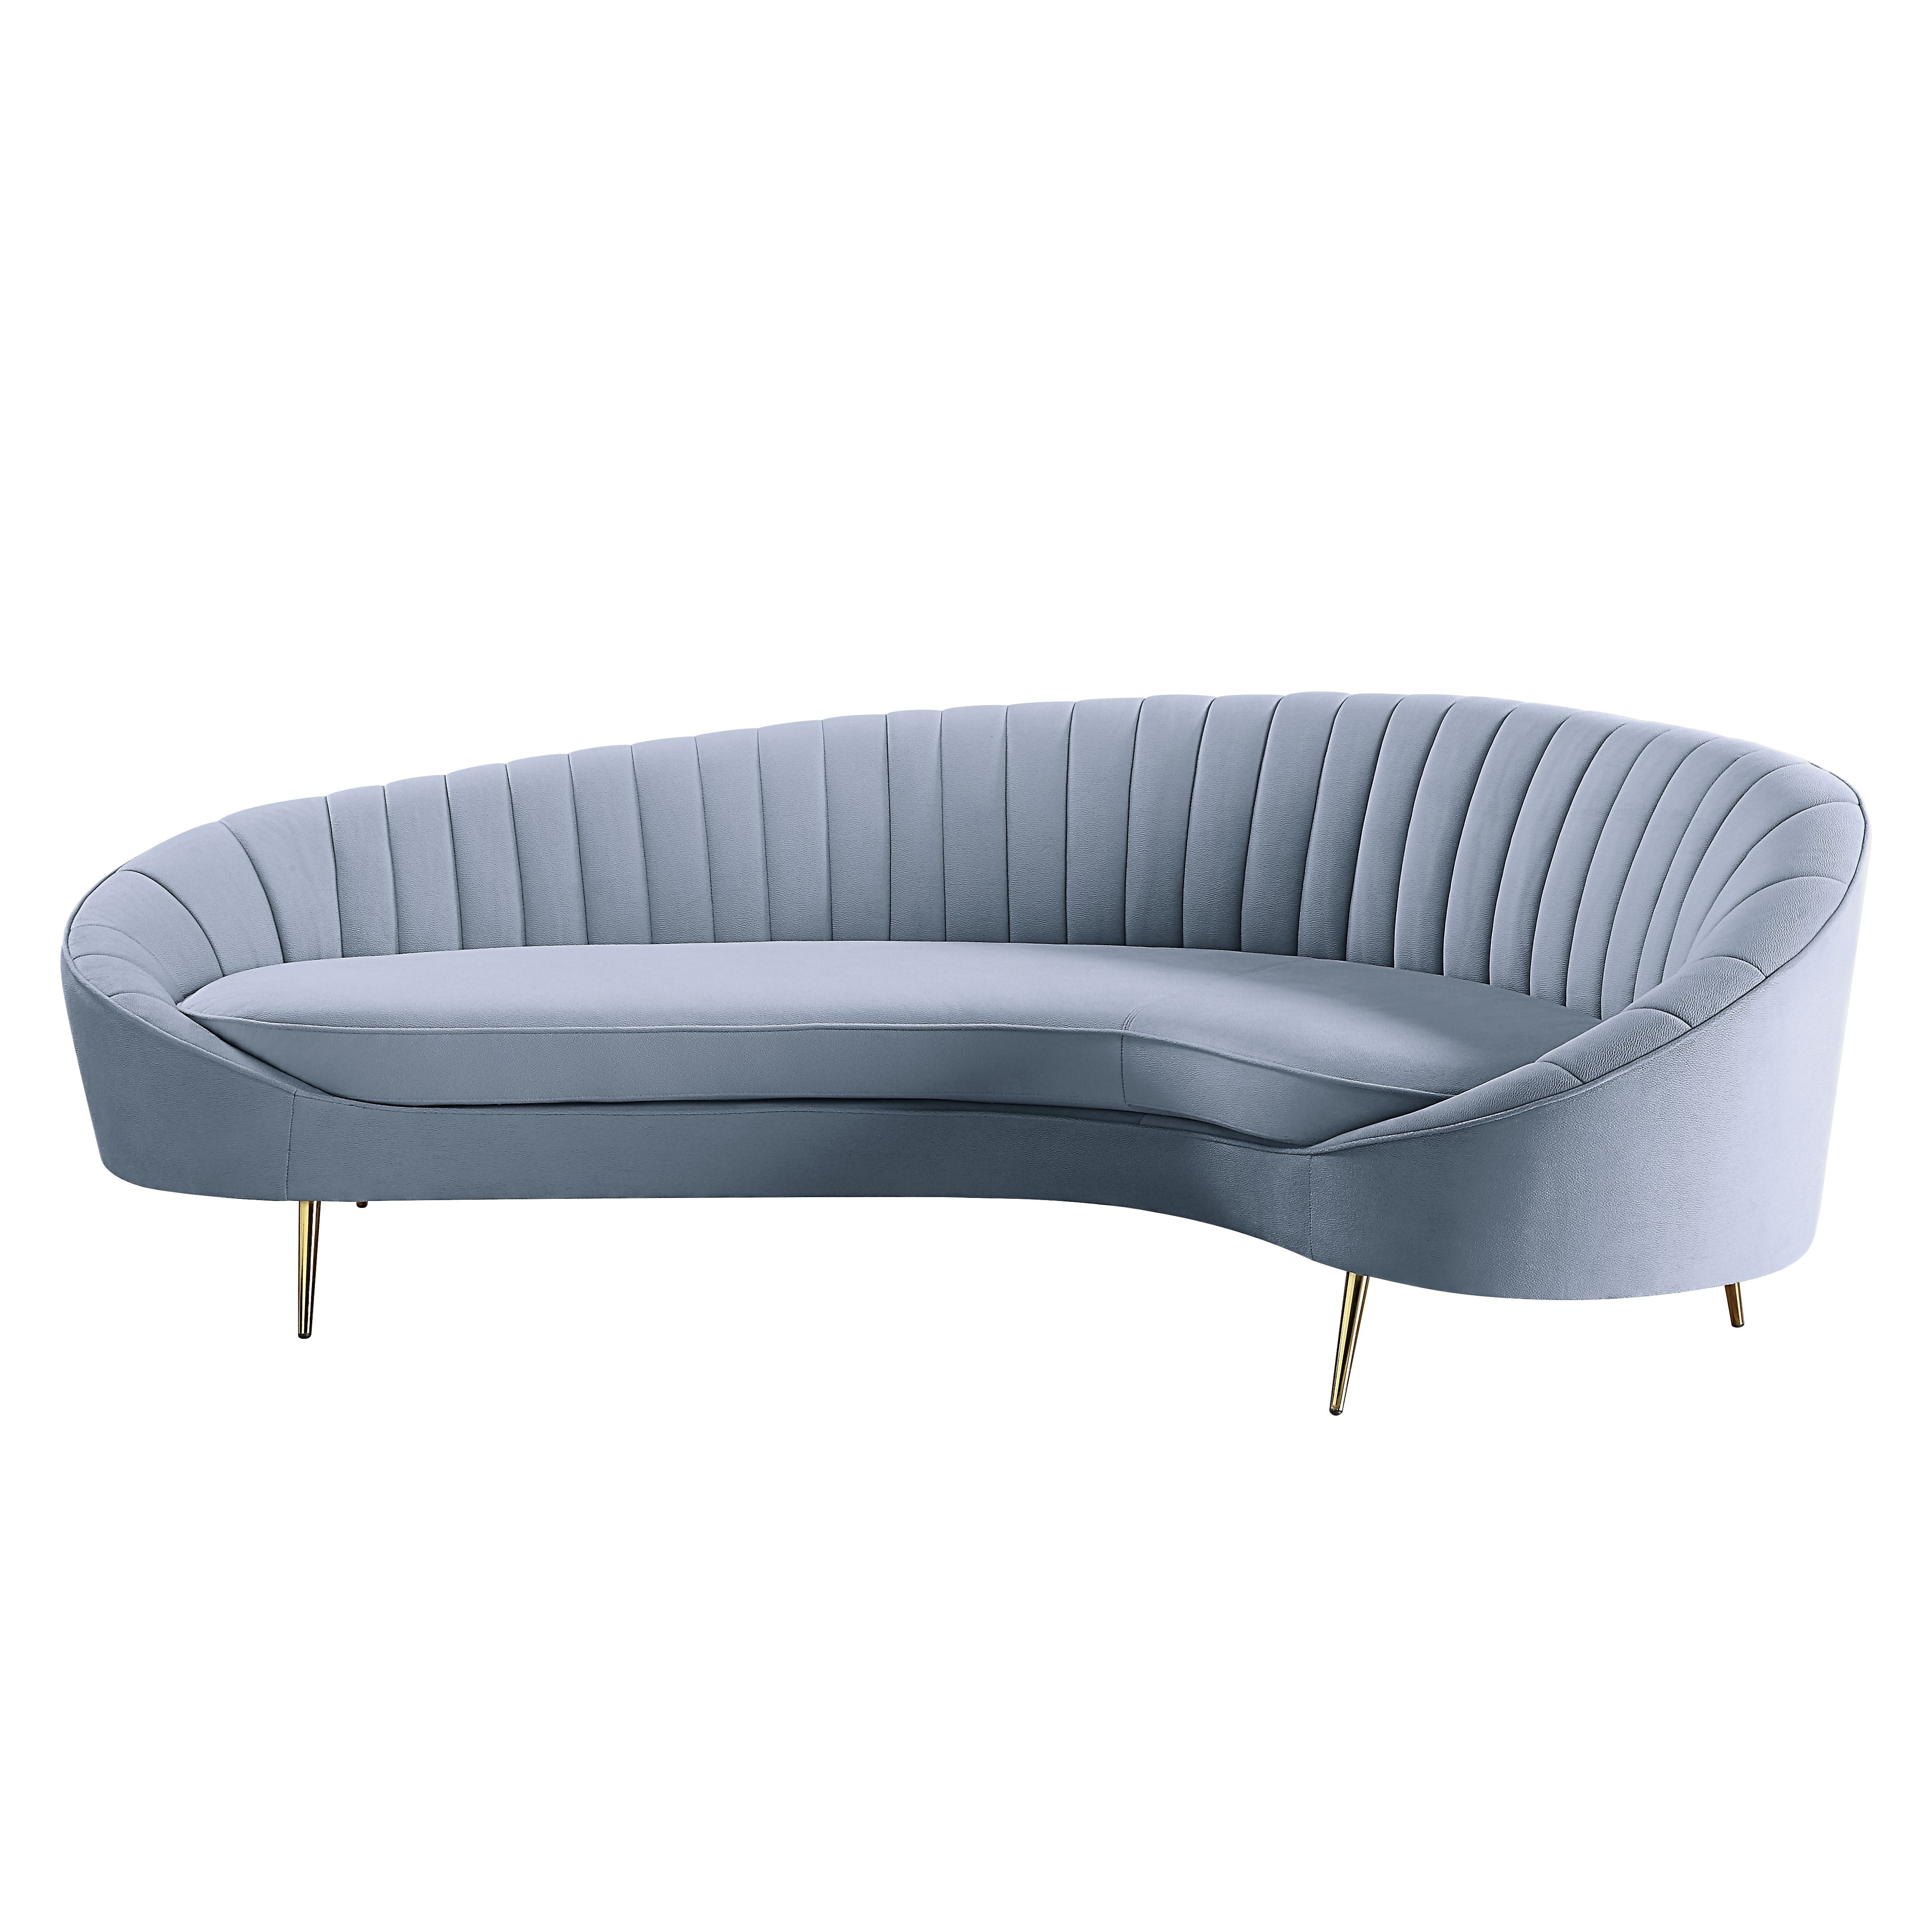 ACME Furniture Sofas & Couches - ACME Ballard Sofa, Light Gray Velvet